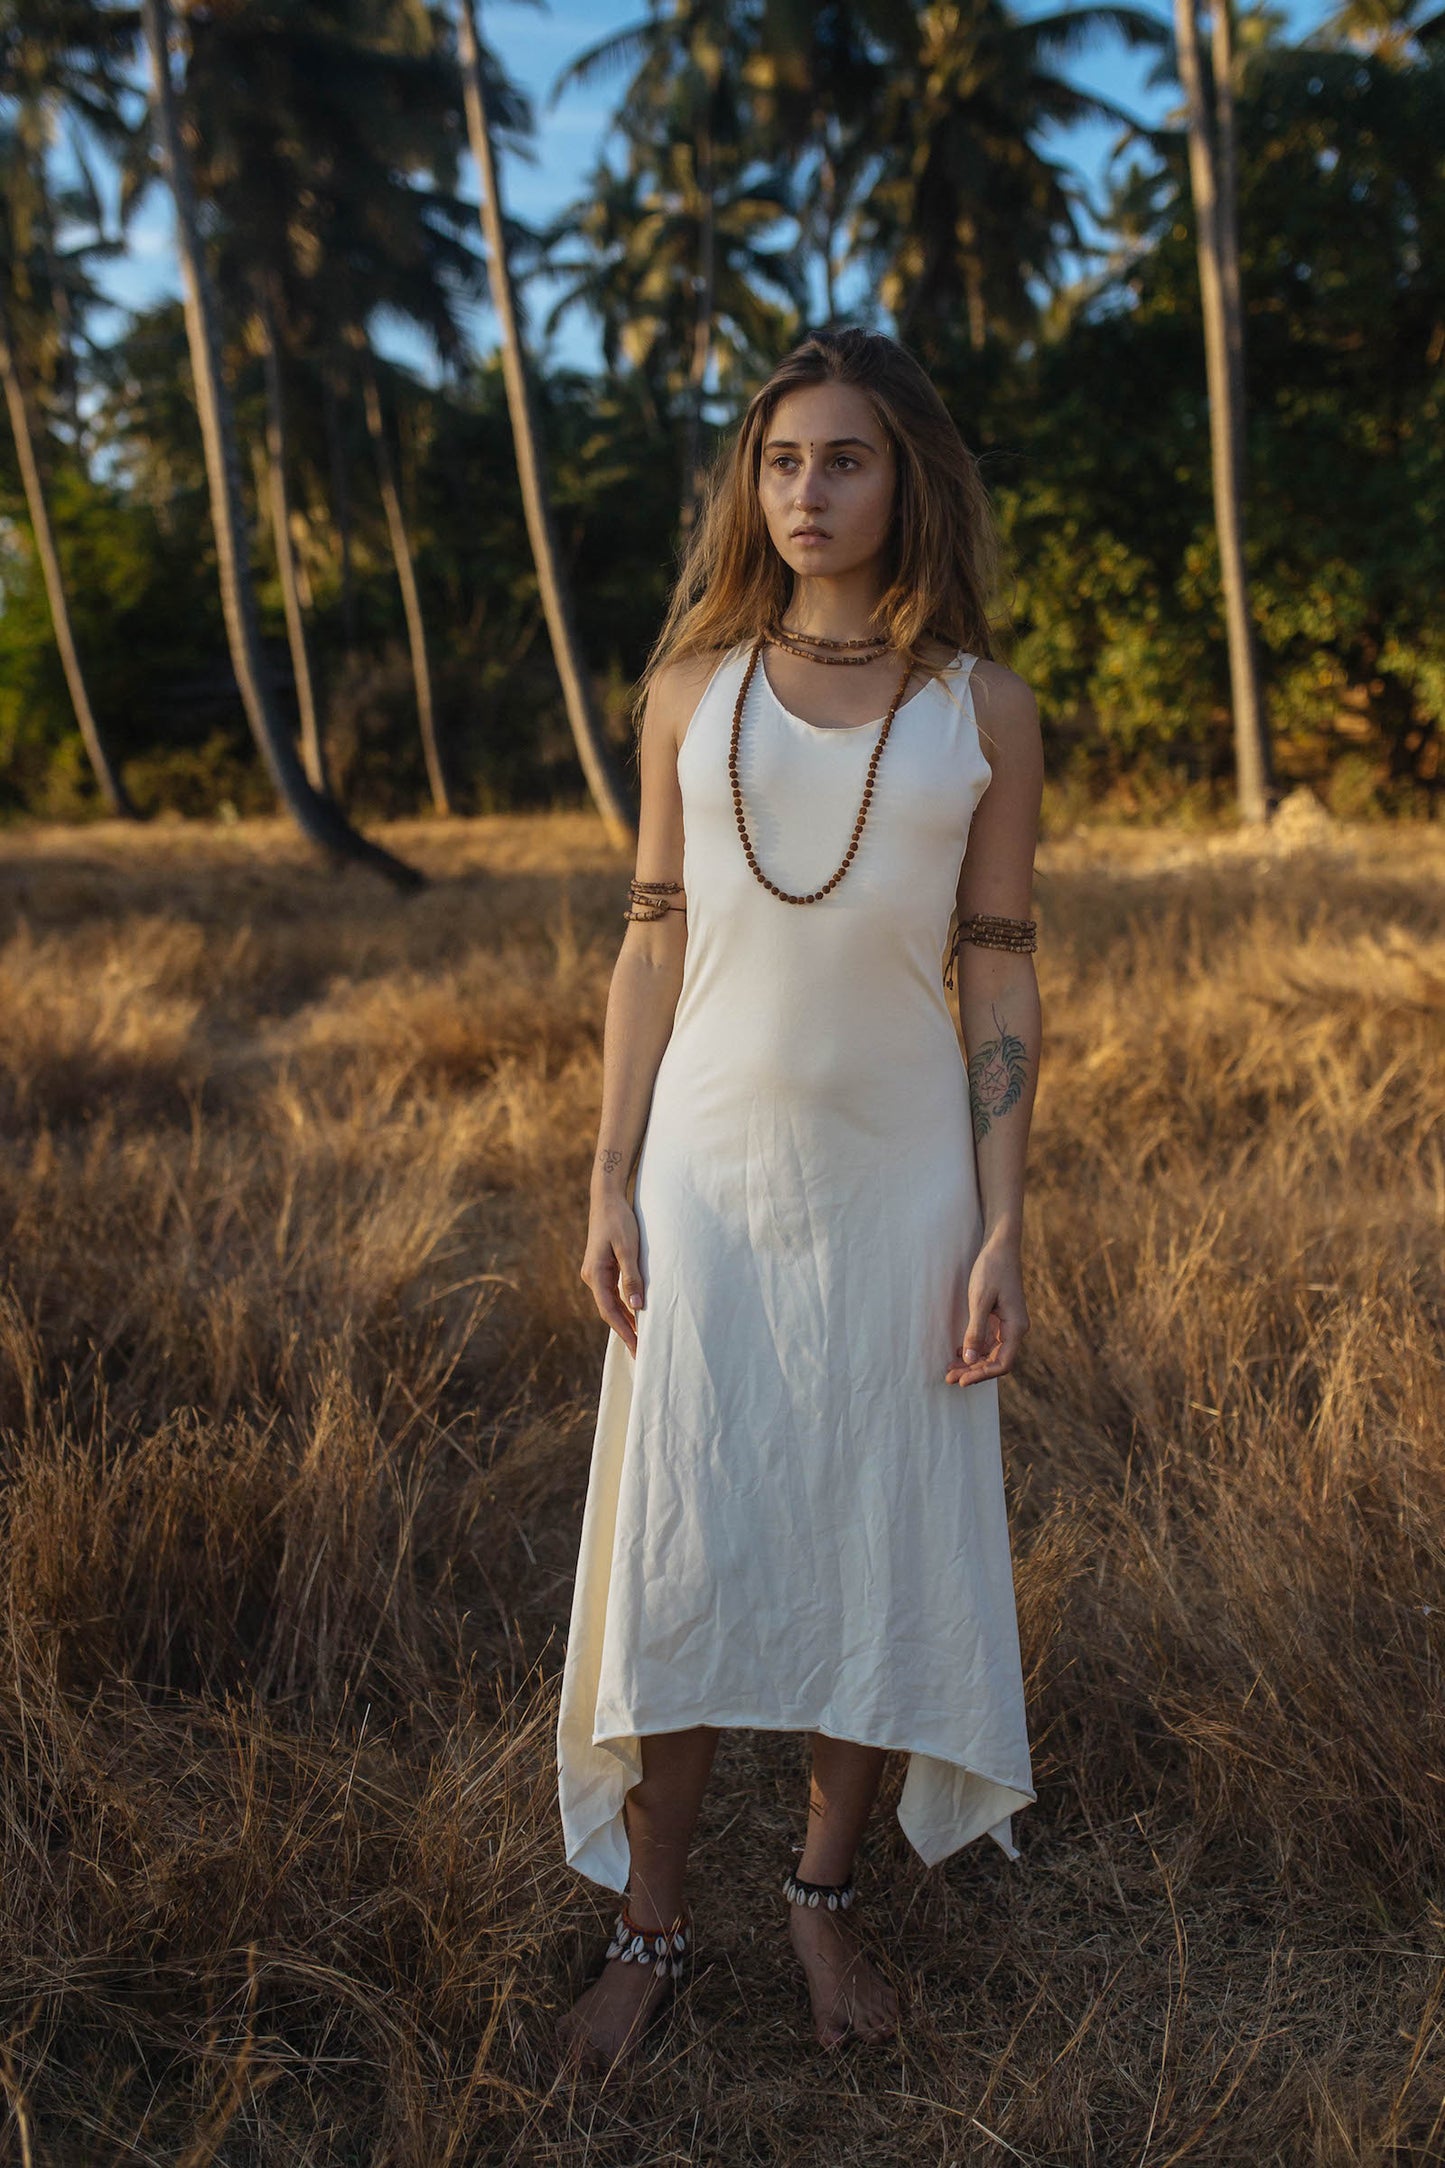 Organic Cotton Sleeveless Dress